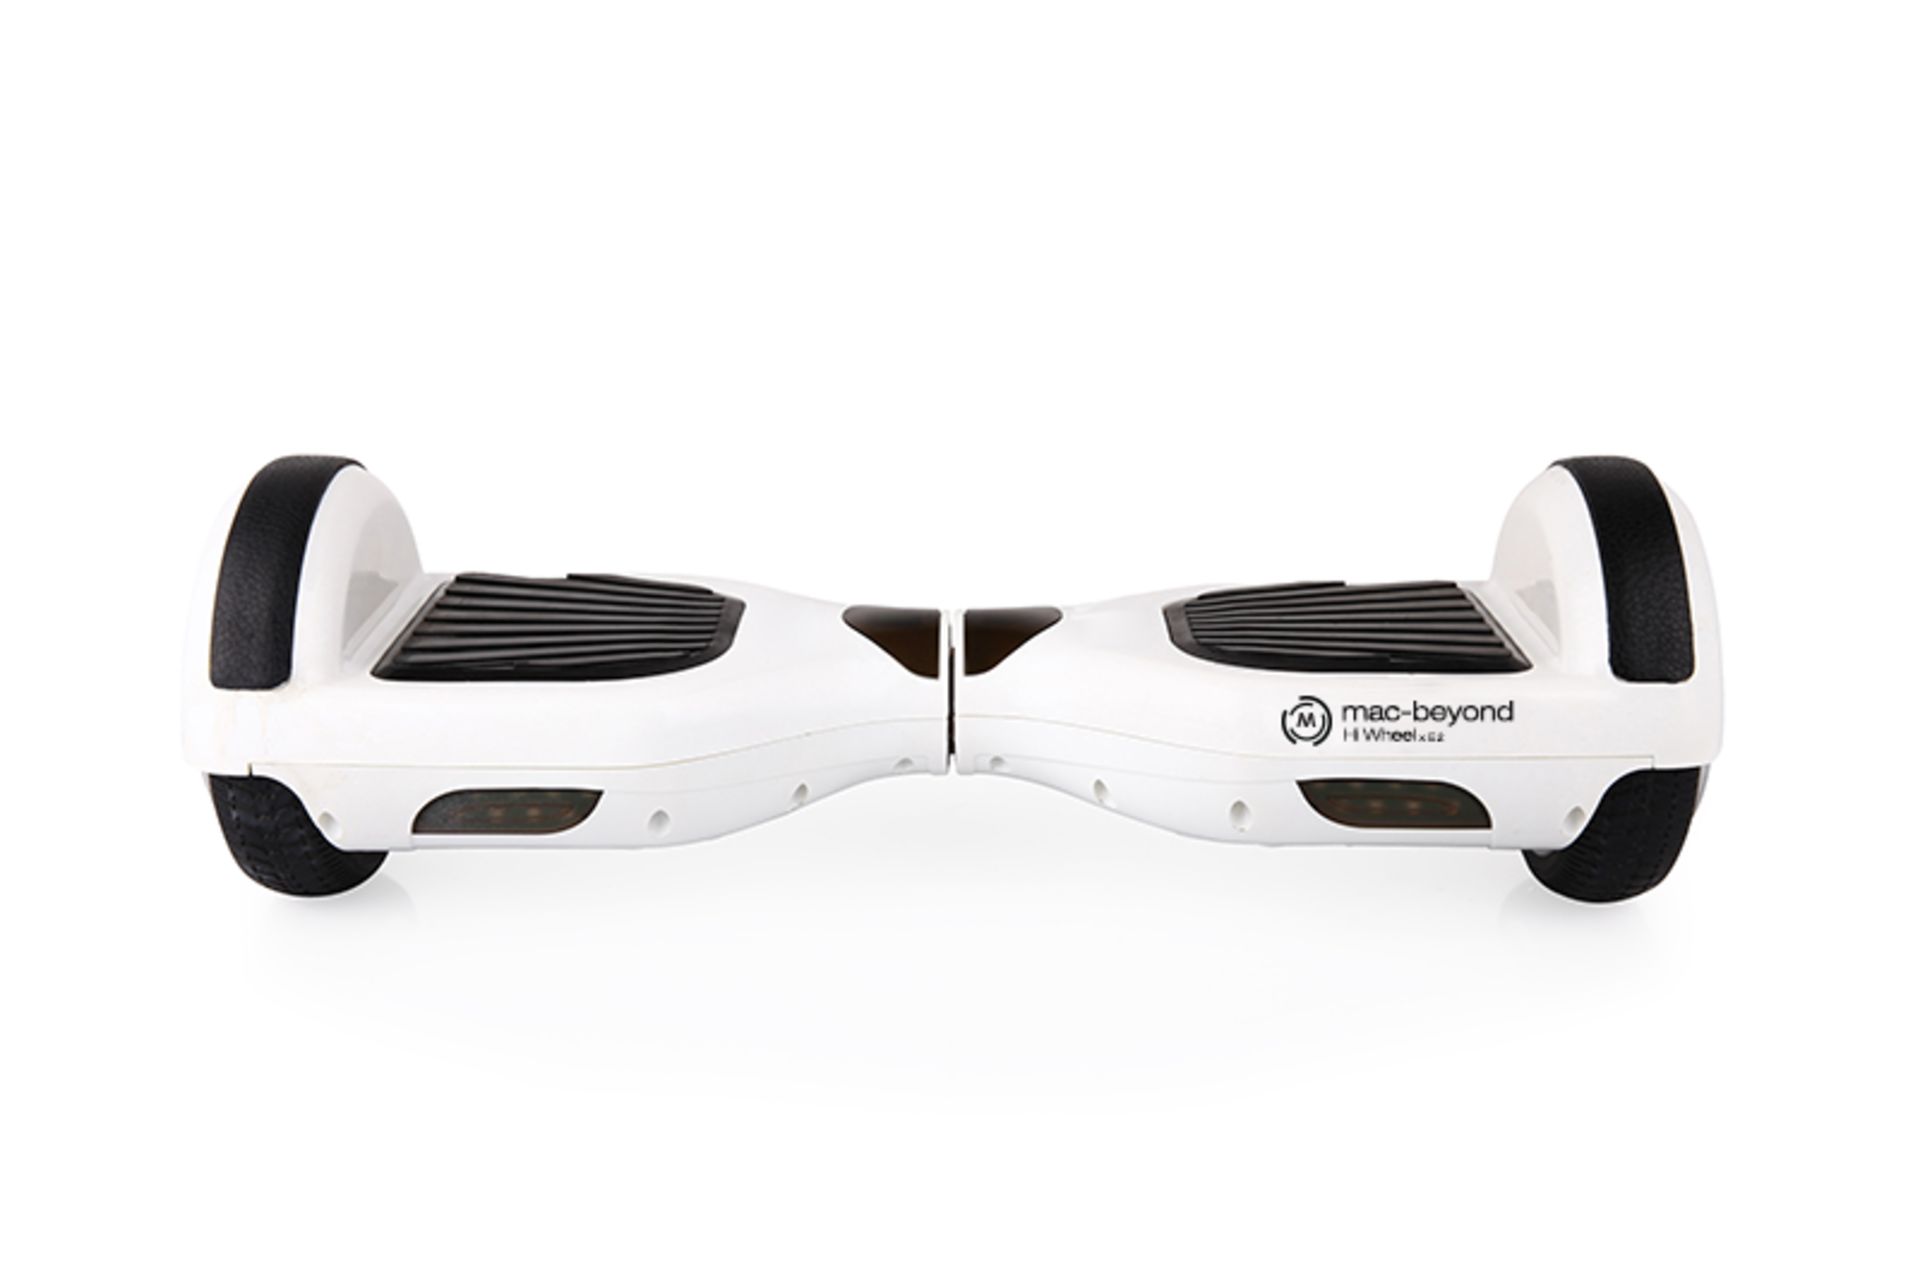 macbeyond x Hi wheel Series, White Model Name: R2 LED (6.5 inch wheels, Best Seller) Smart